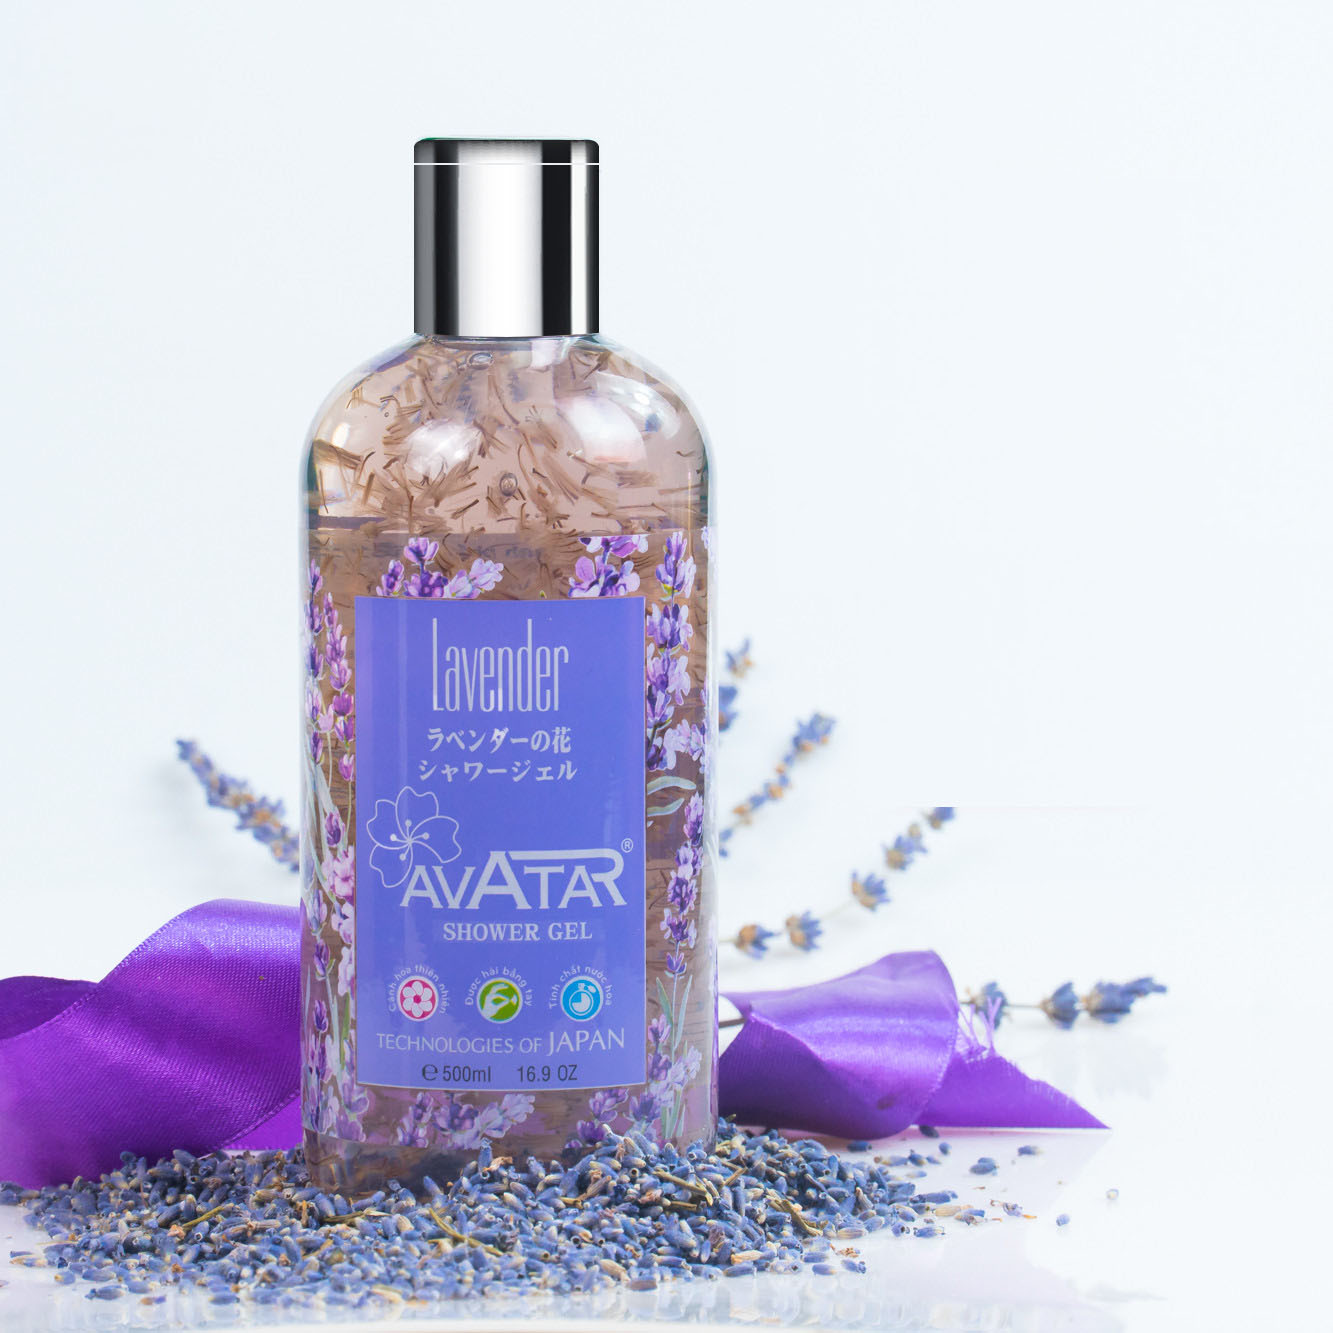 Avatar Lavender Shower Gel